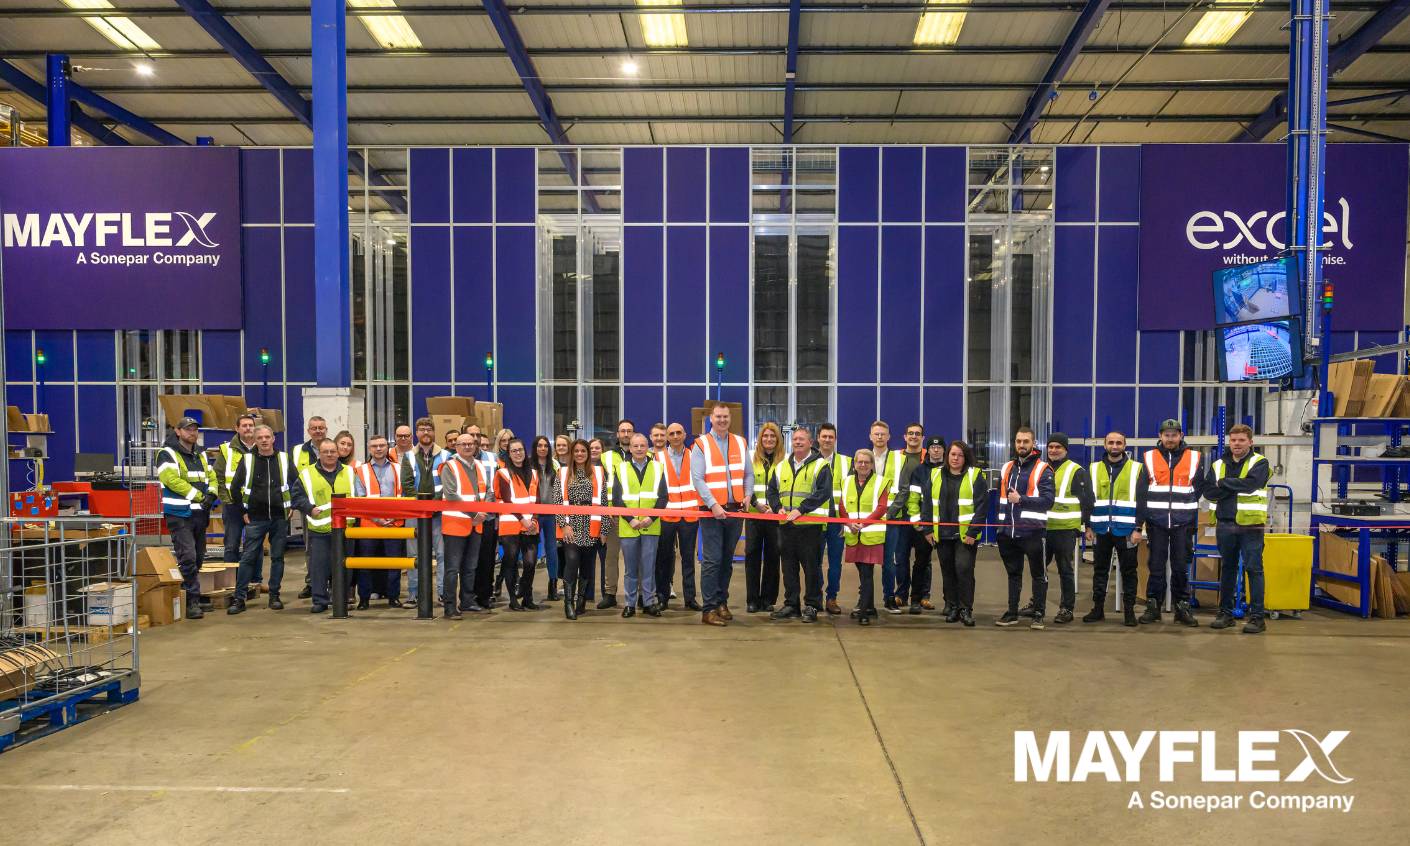 Mayflex enhances its Central Distribution Centre with automation